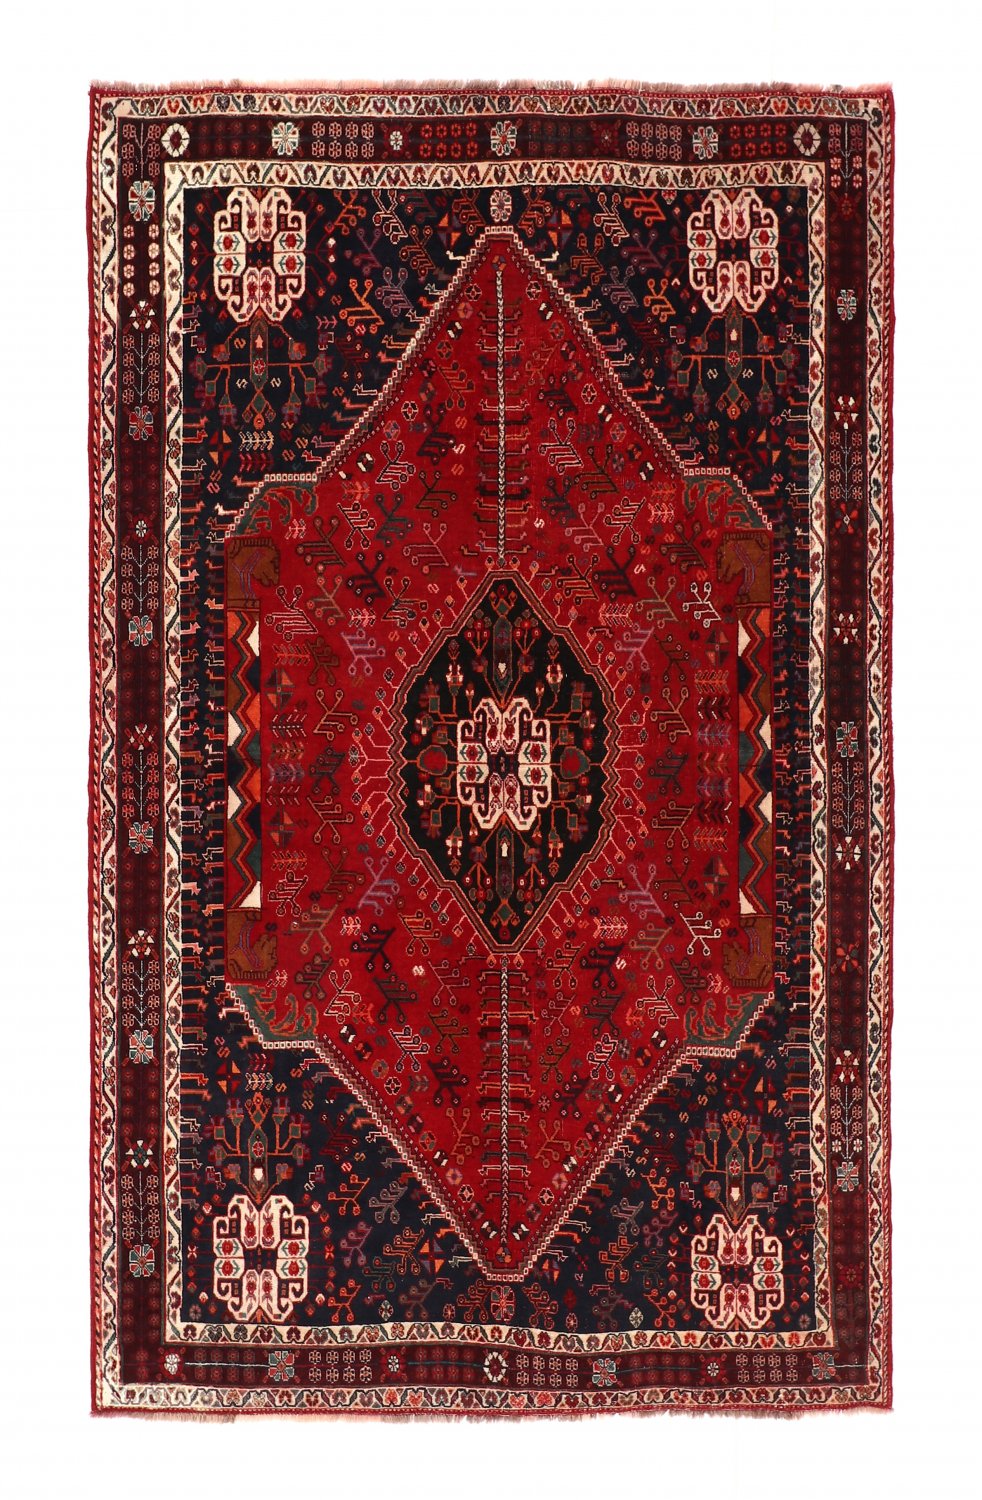 Persian Kilim 258 x 156 cm